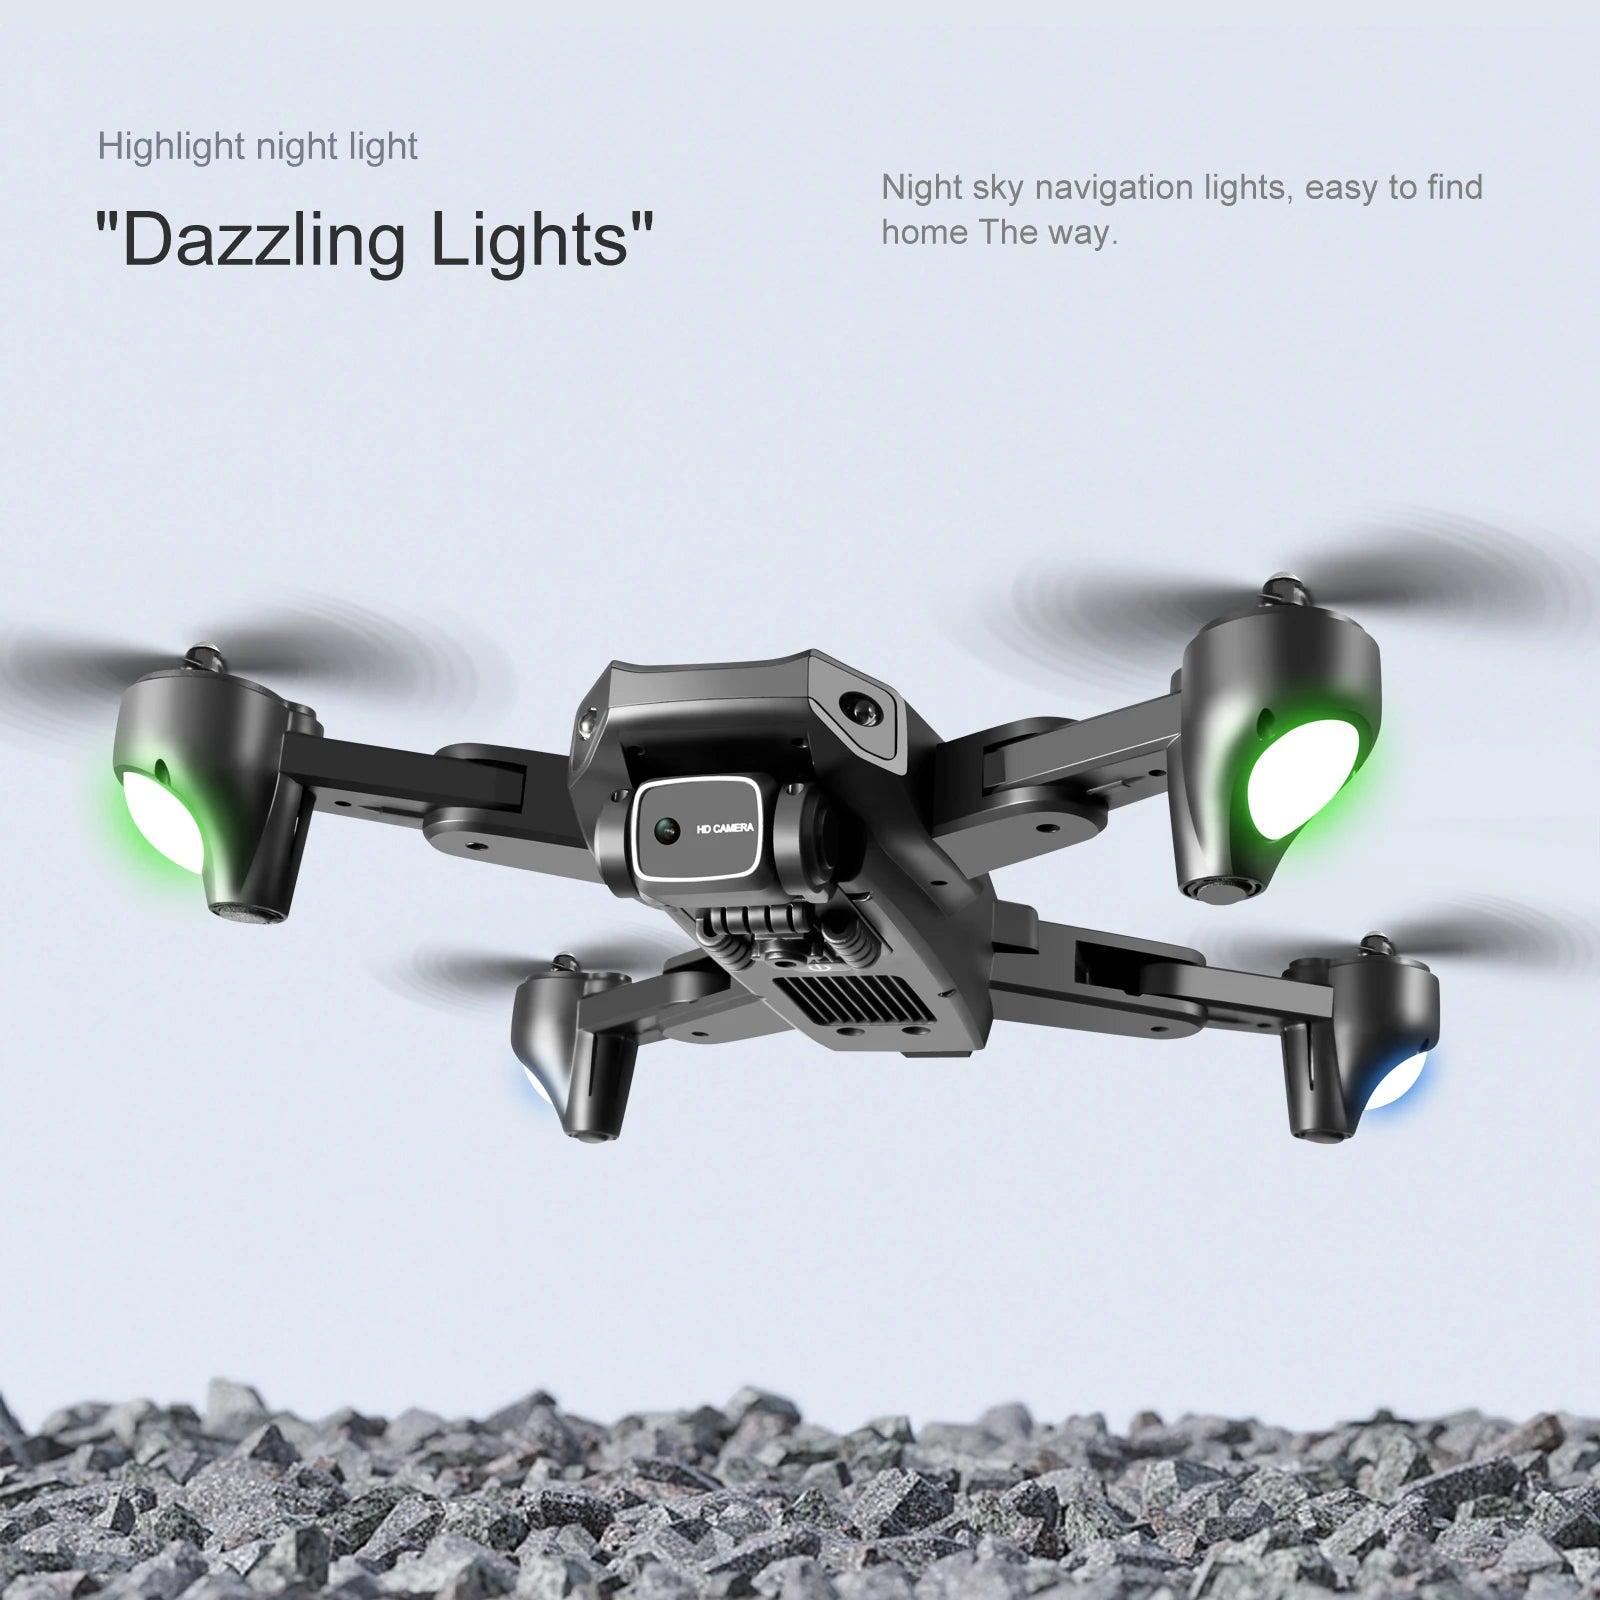 S93 Drone, highlight night light night sky navigation lights, easy to find "dazzling lights